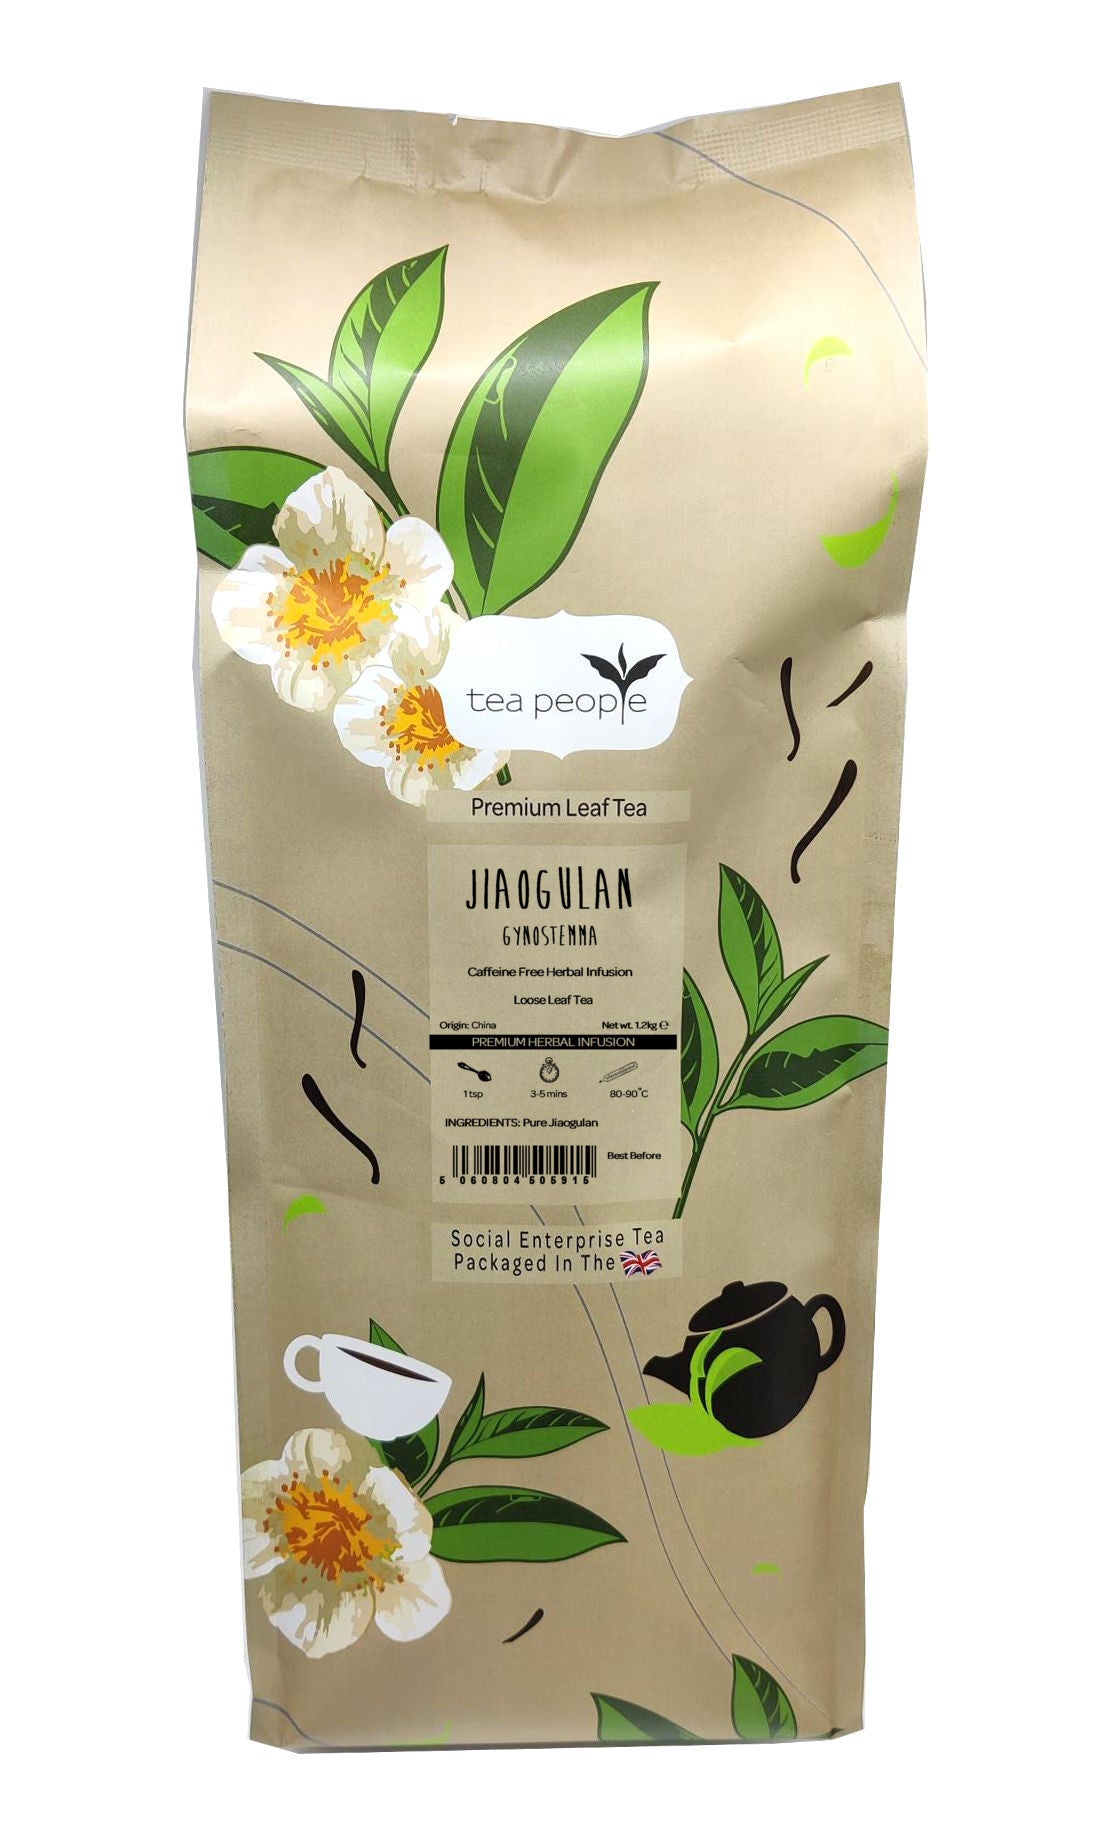 Jiaogulan (Gynostemma) - Loose Herbal Tea